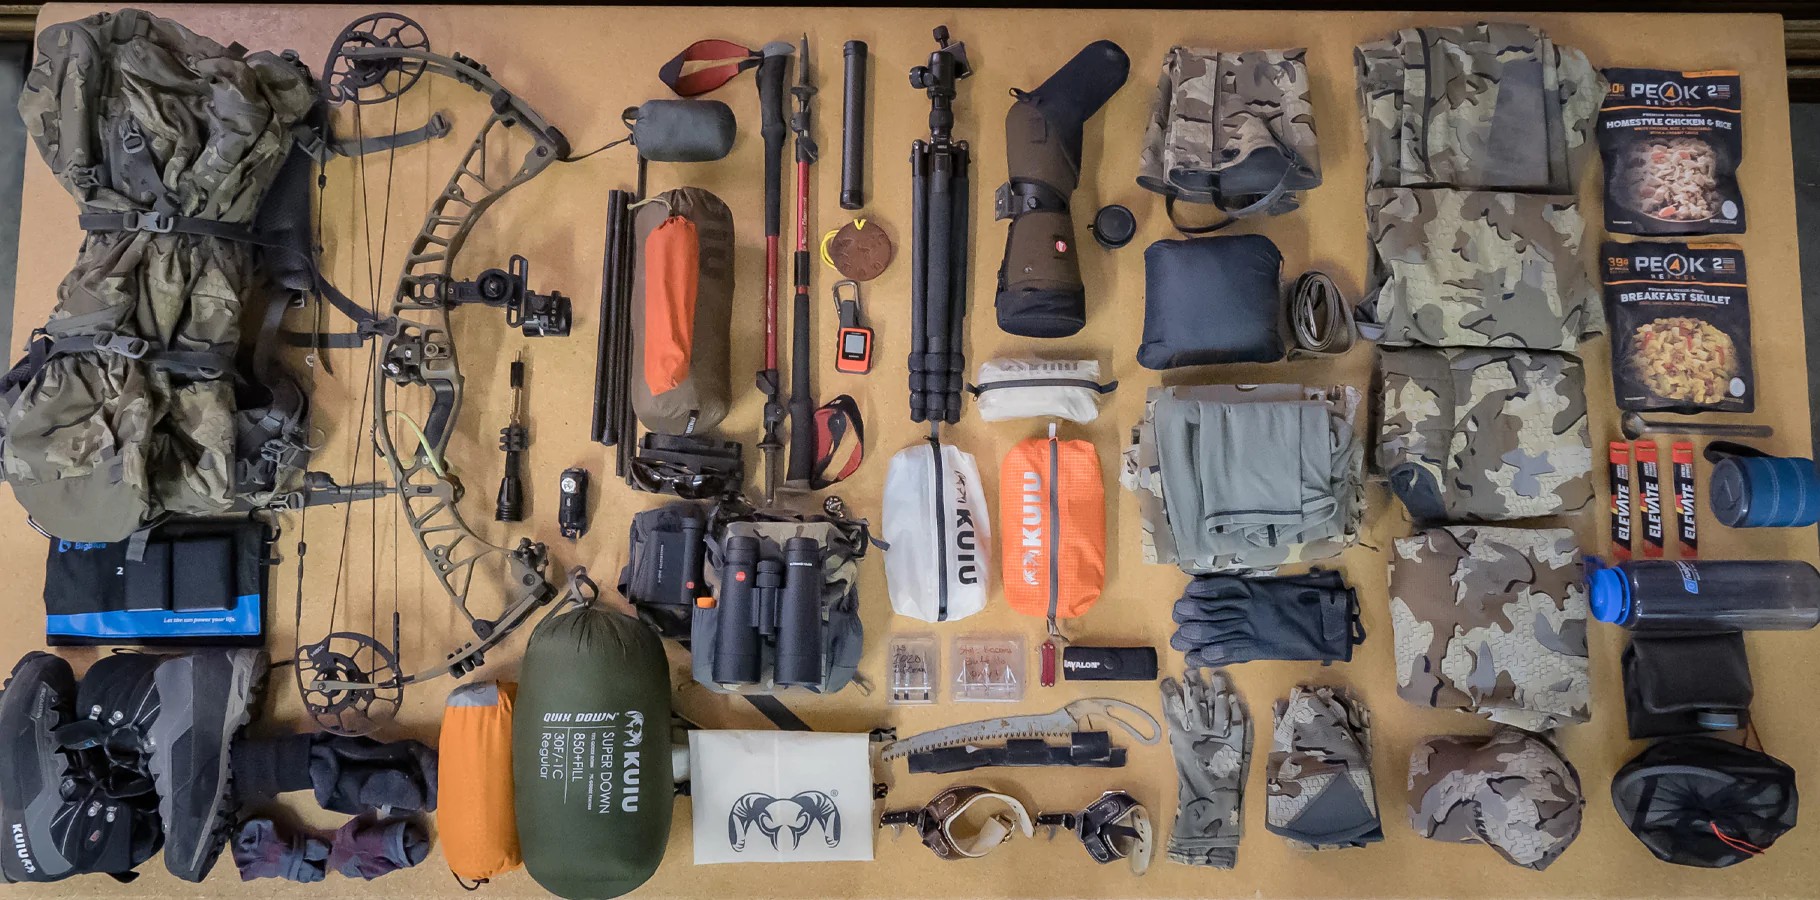 hunting gear